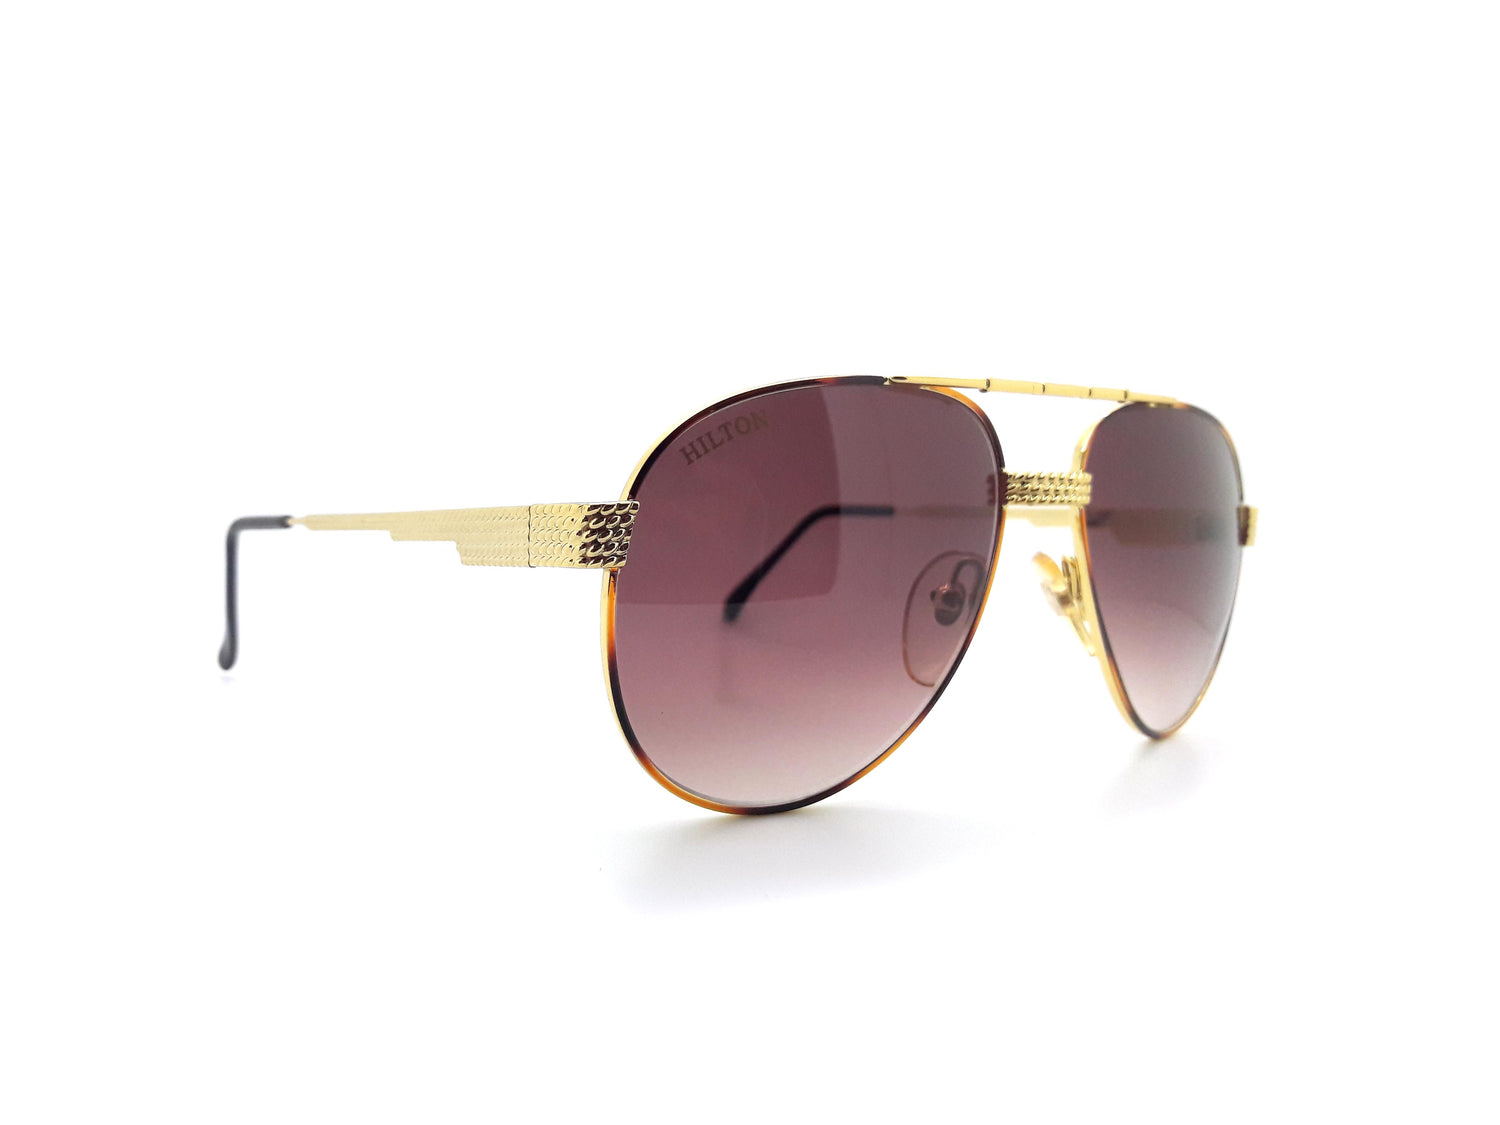 Paris Hilton Sunglasses | Shop Celebrity Eyewear - US